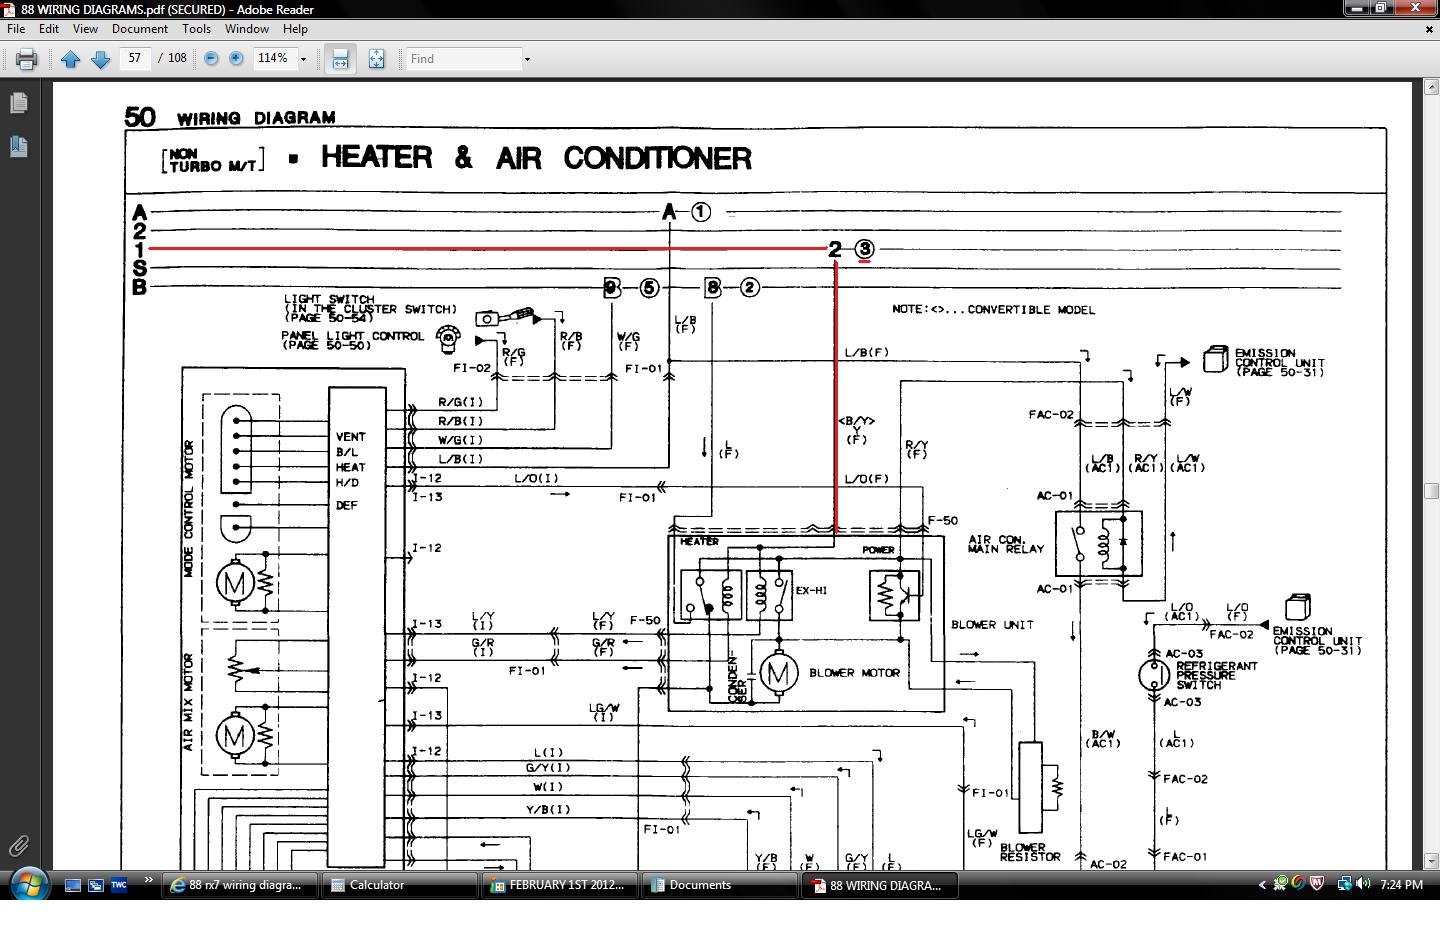 88 rx7 wiring diagram - RX7Club.com - Mazda RX7 Forum 1988 mazda rx7 fuse box diagram 